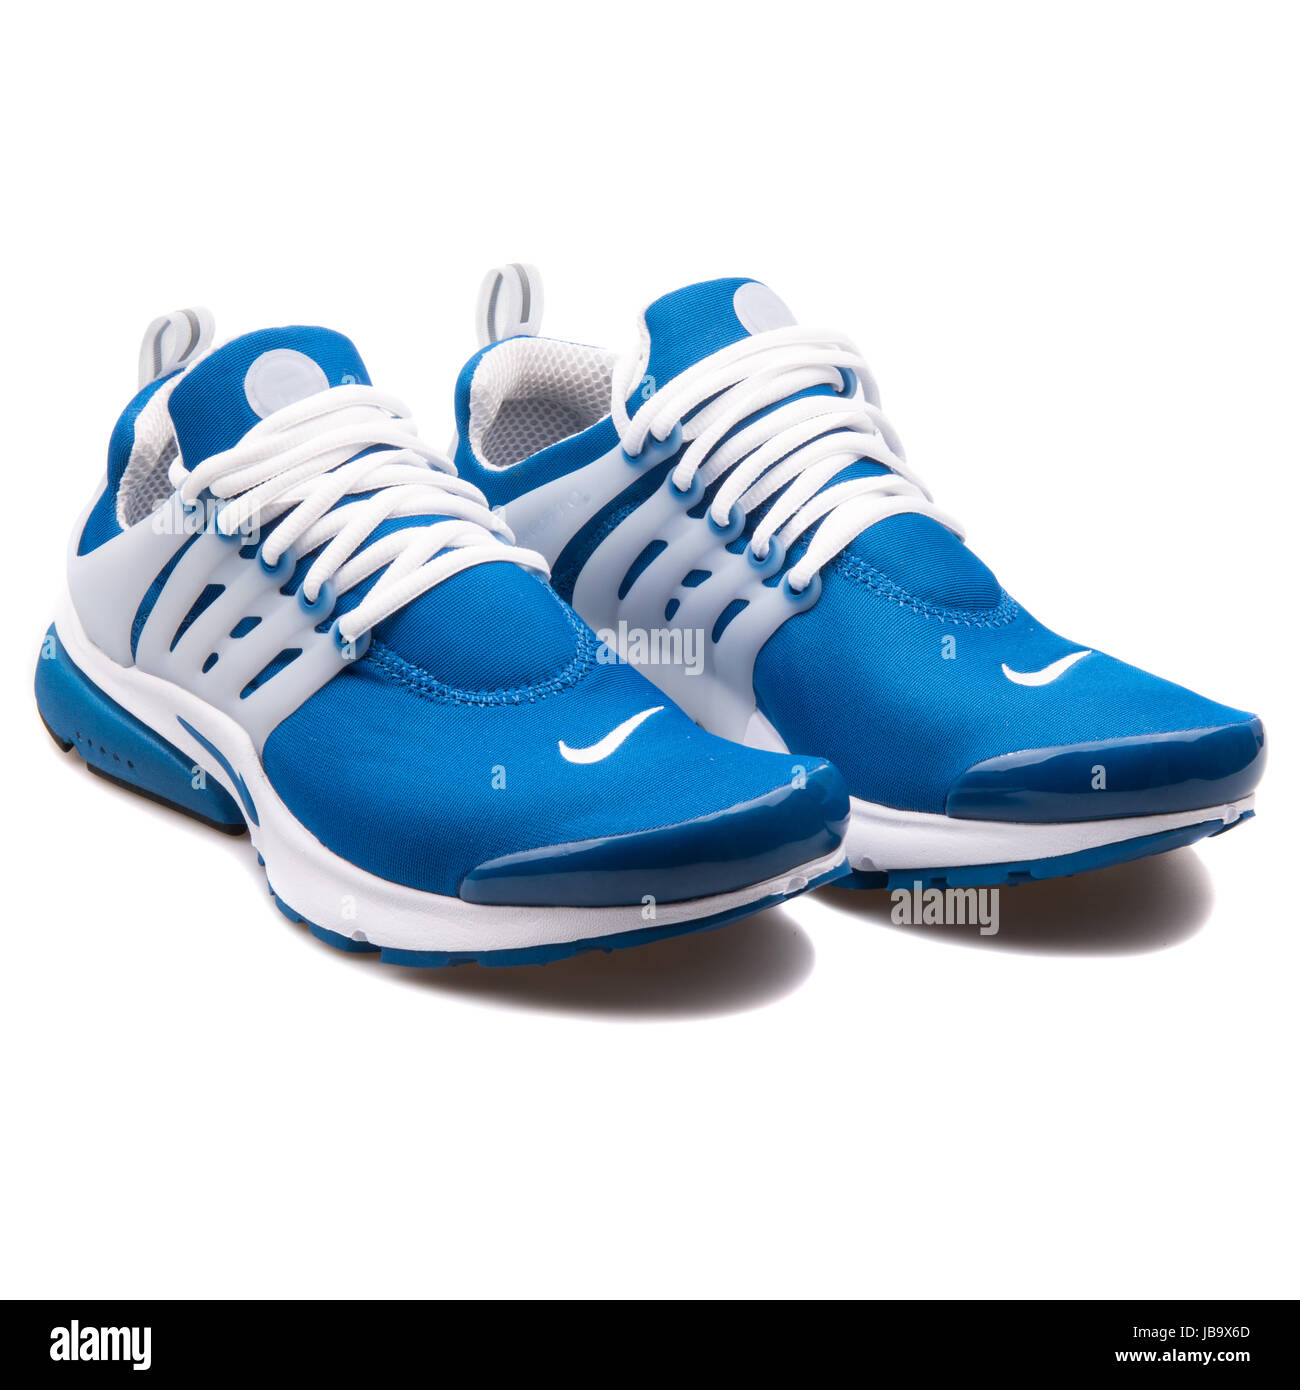 Nike Air Presto bleu et blanc QS Men's chaussures running - 789870-413  Photo Stock - Alamy